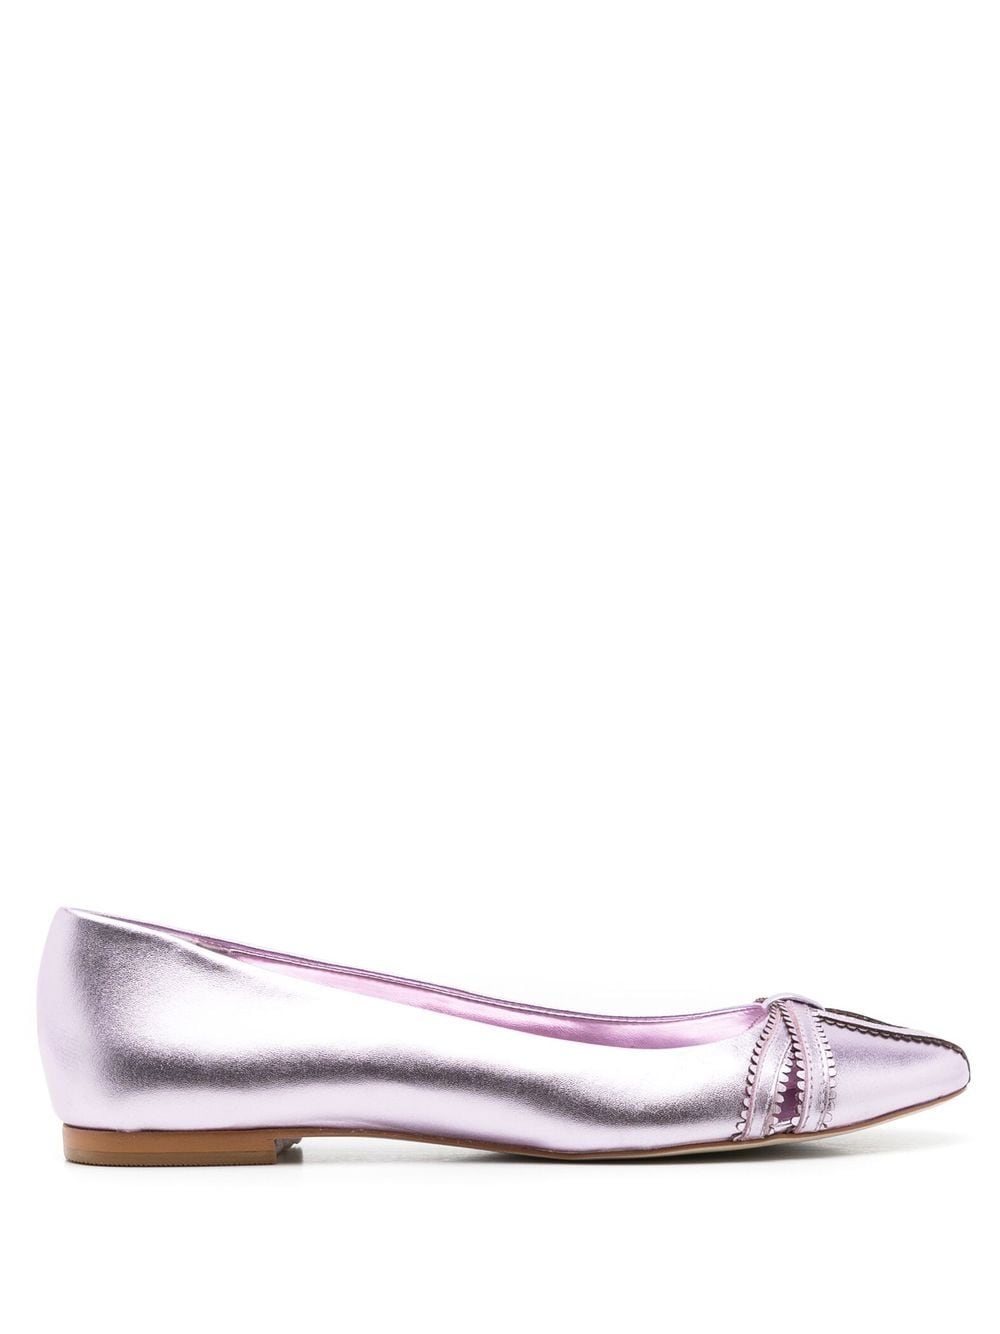 Sarah Chofakian Pati leather ballerina shoes - Pink von Sarah Chofakian